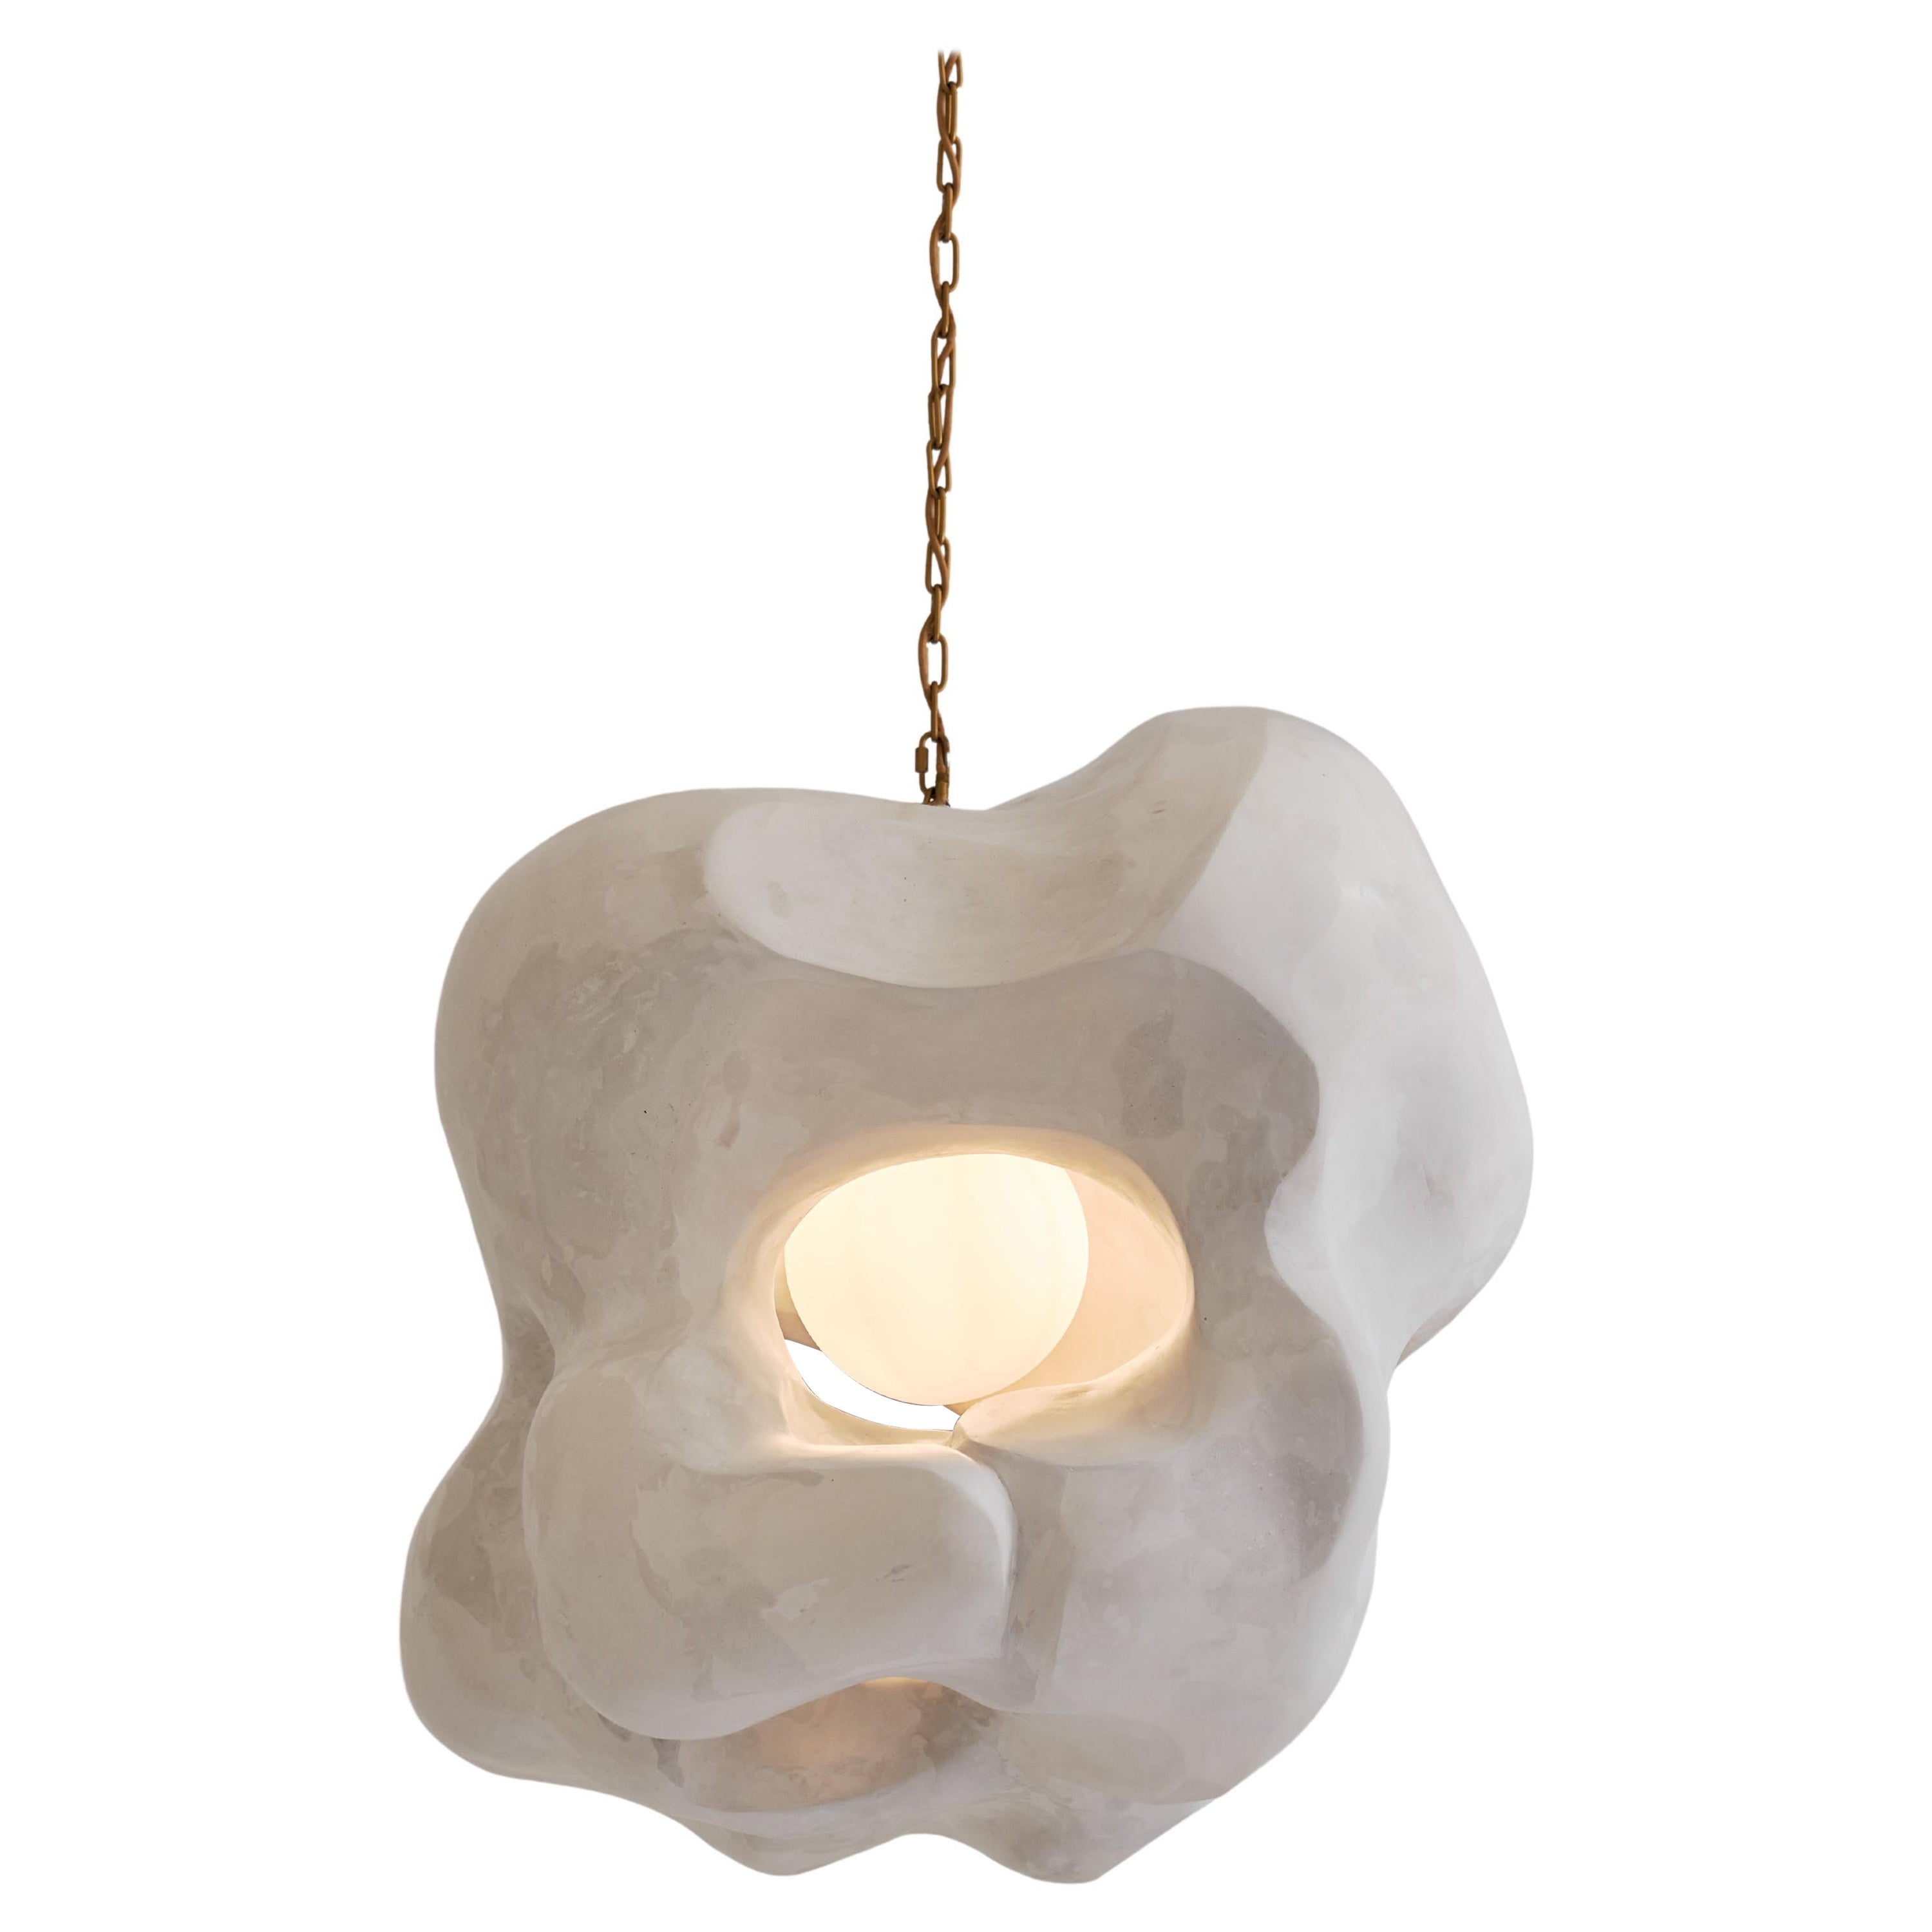 Small Contemporary Pendant Light, Sculptural Collectible Design "Ikigai" by AOAO